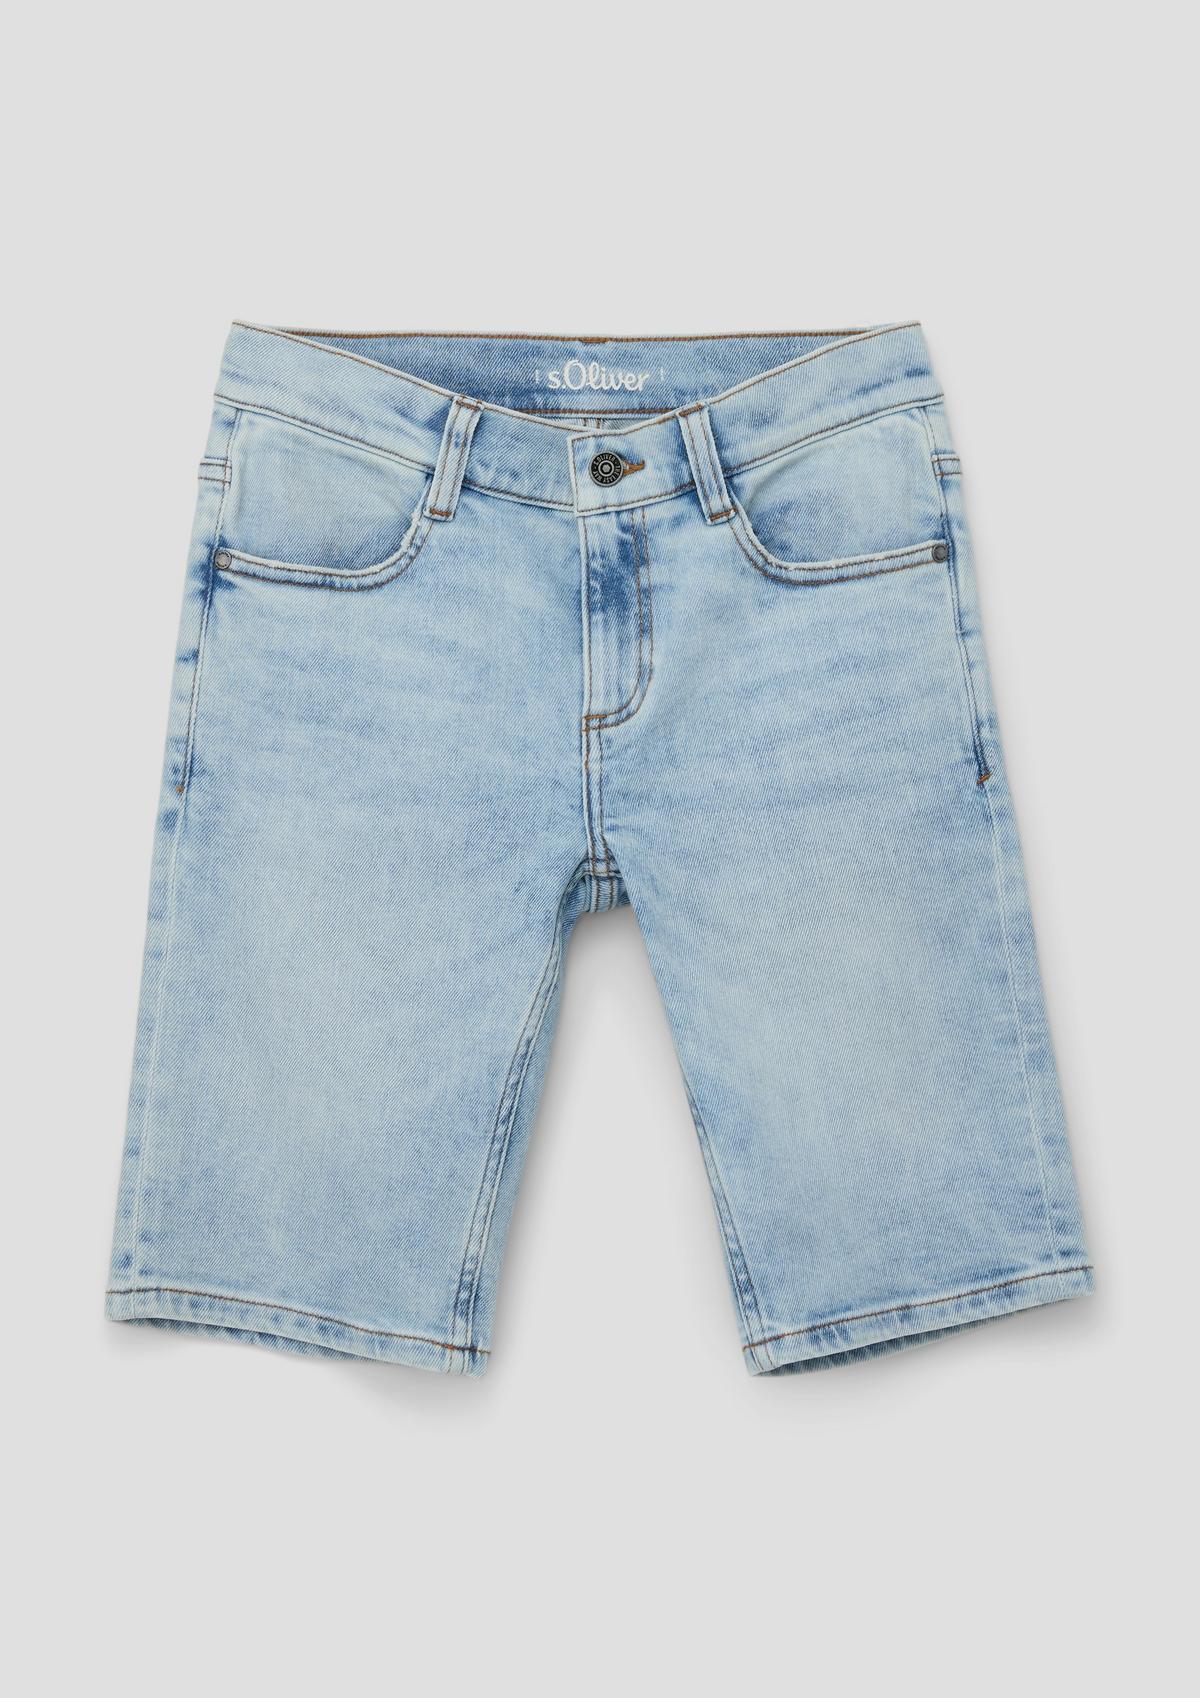 s.Oliver Bermuda Jeans Seattle / Regular fit / Mid rise / Slim leg